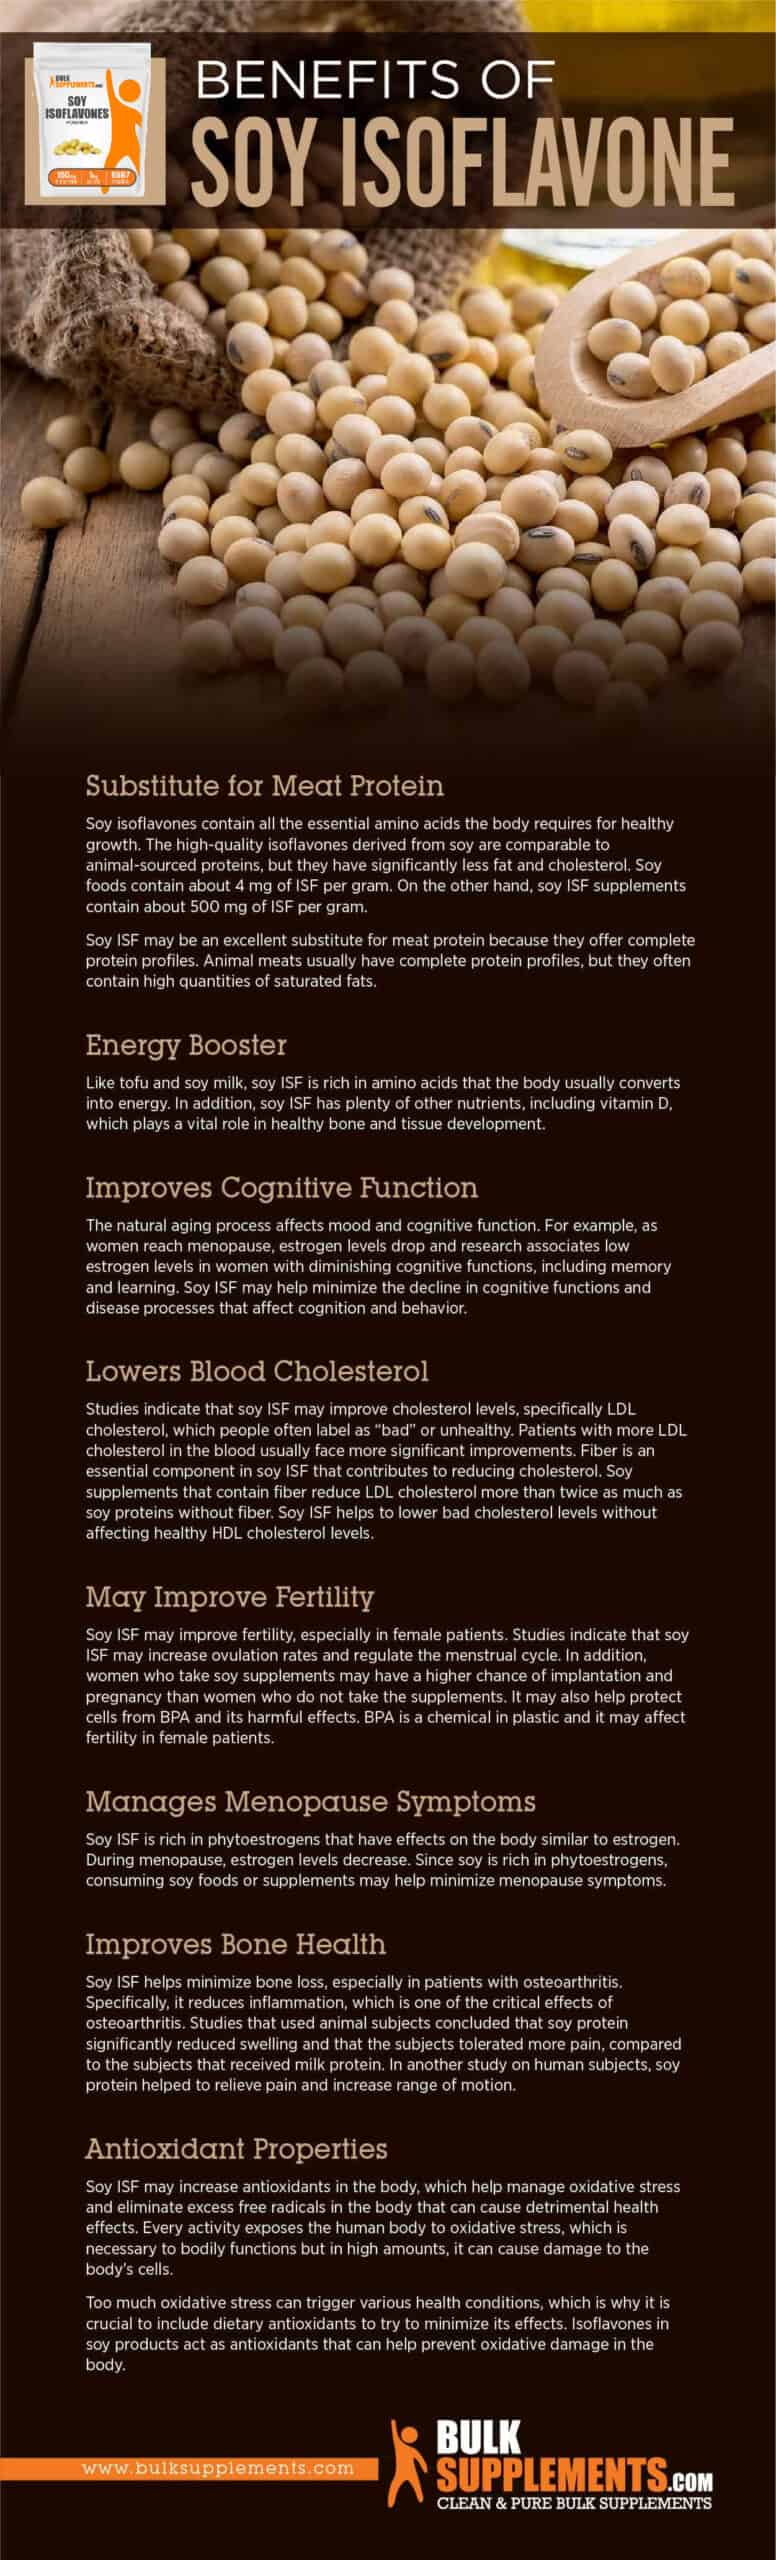 Benefits of Soy Isoflavone